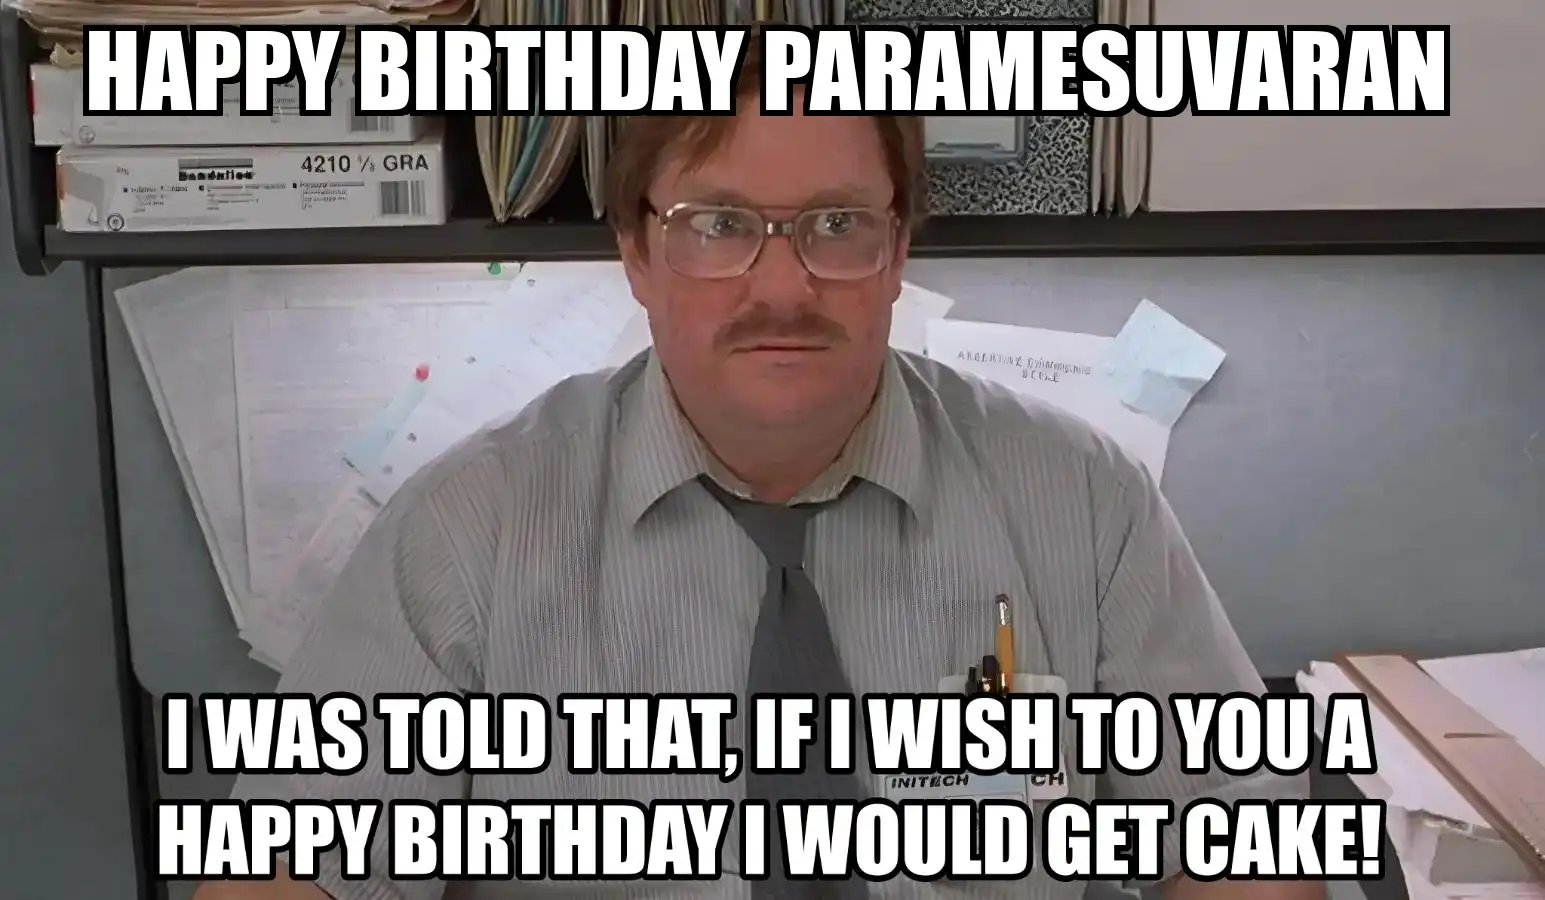 Happy Birthday Paramesuvaran I Would Get A Cake Meme